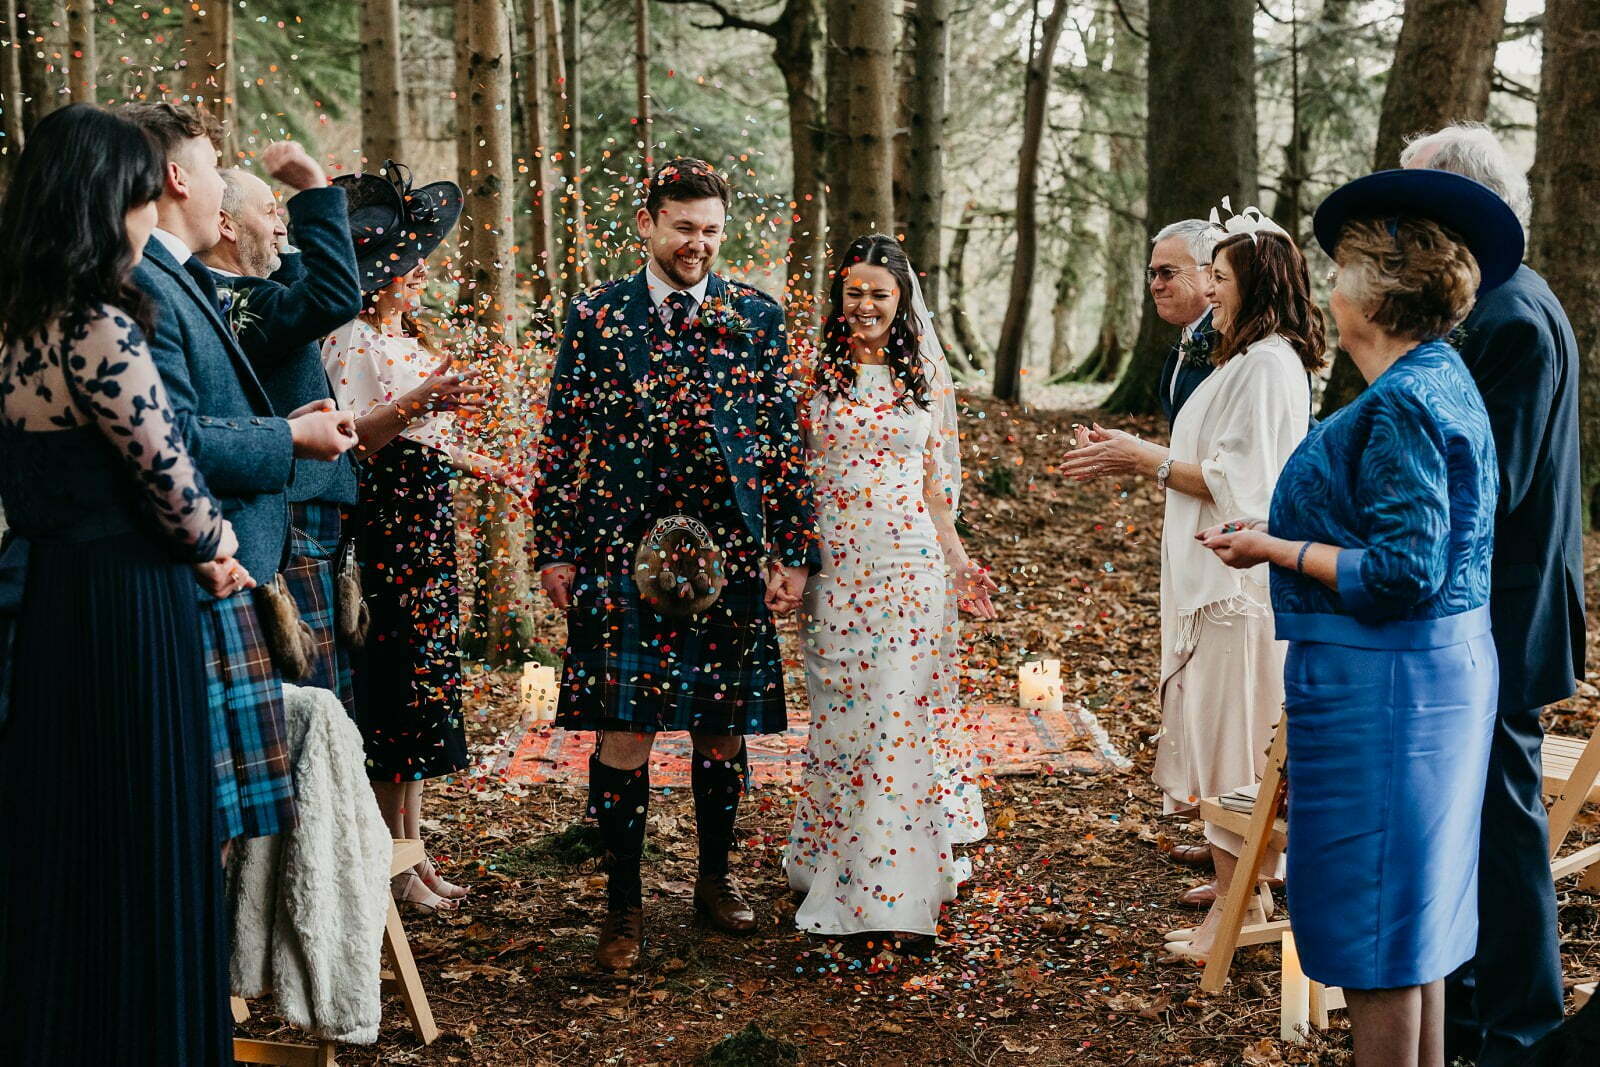 micro wedding planner scotland at glen dye estate and cabins luxury woodland wedding ceremony aberdeenshire bride groom confetti throw